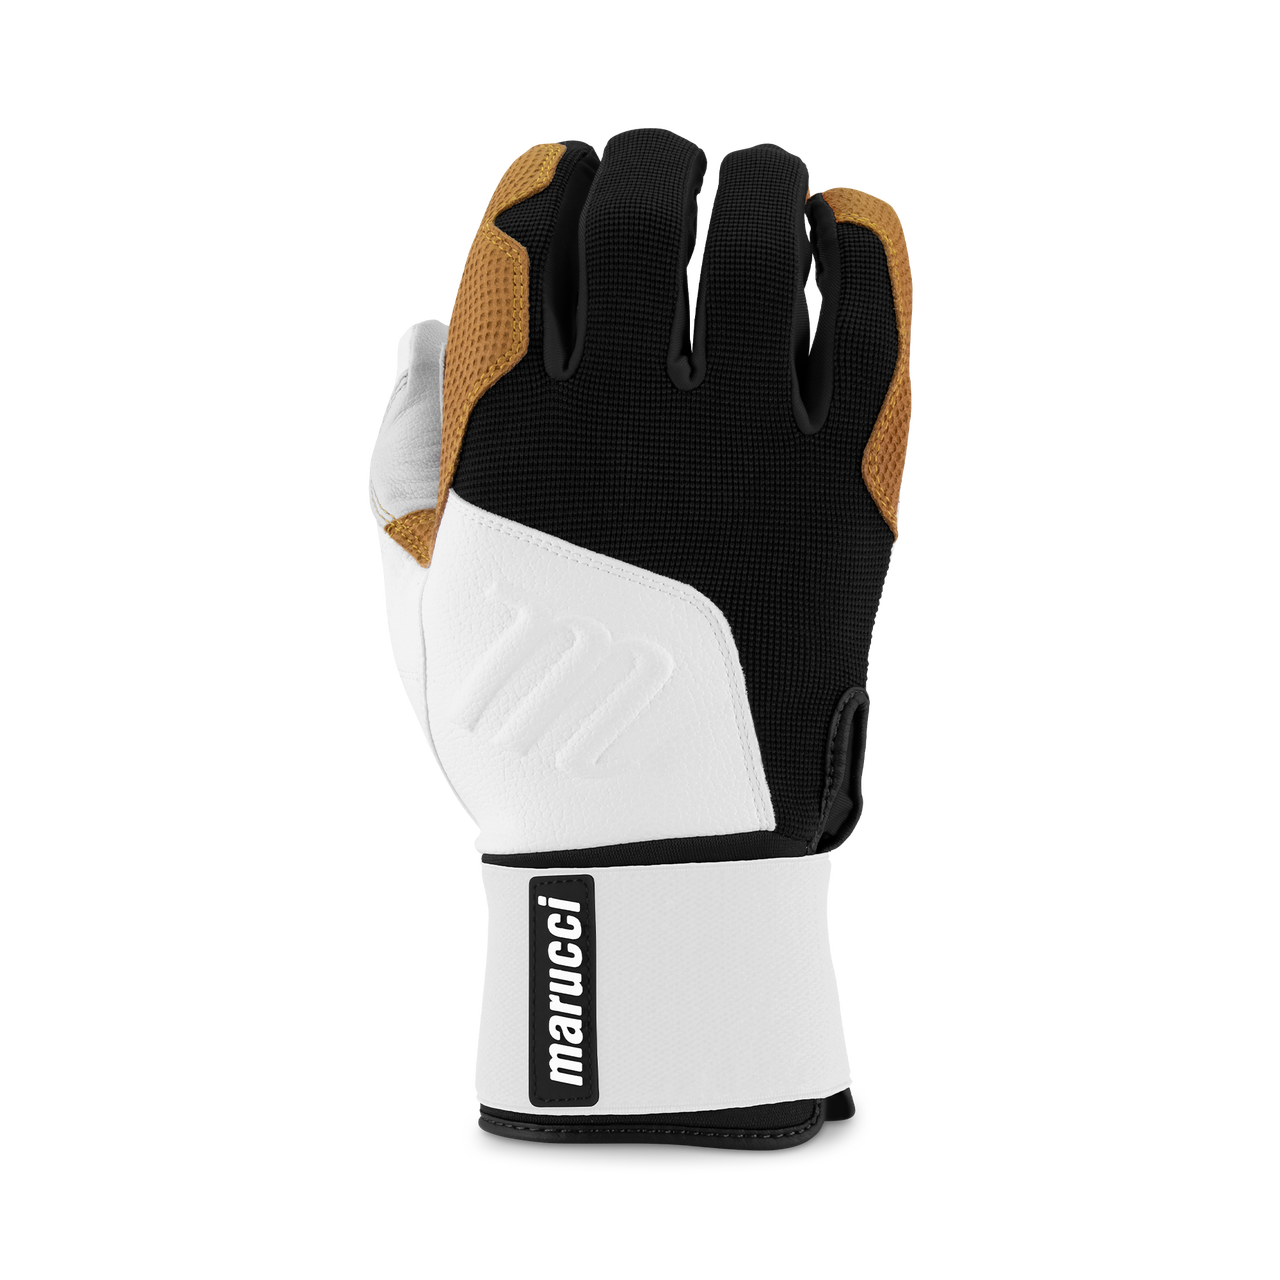 Marucci Blacksmith Full Wrap Batting Gloves White/Black